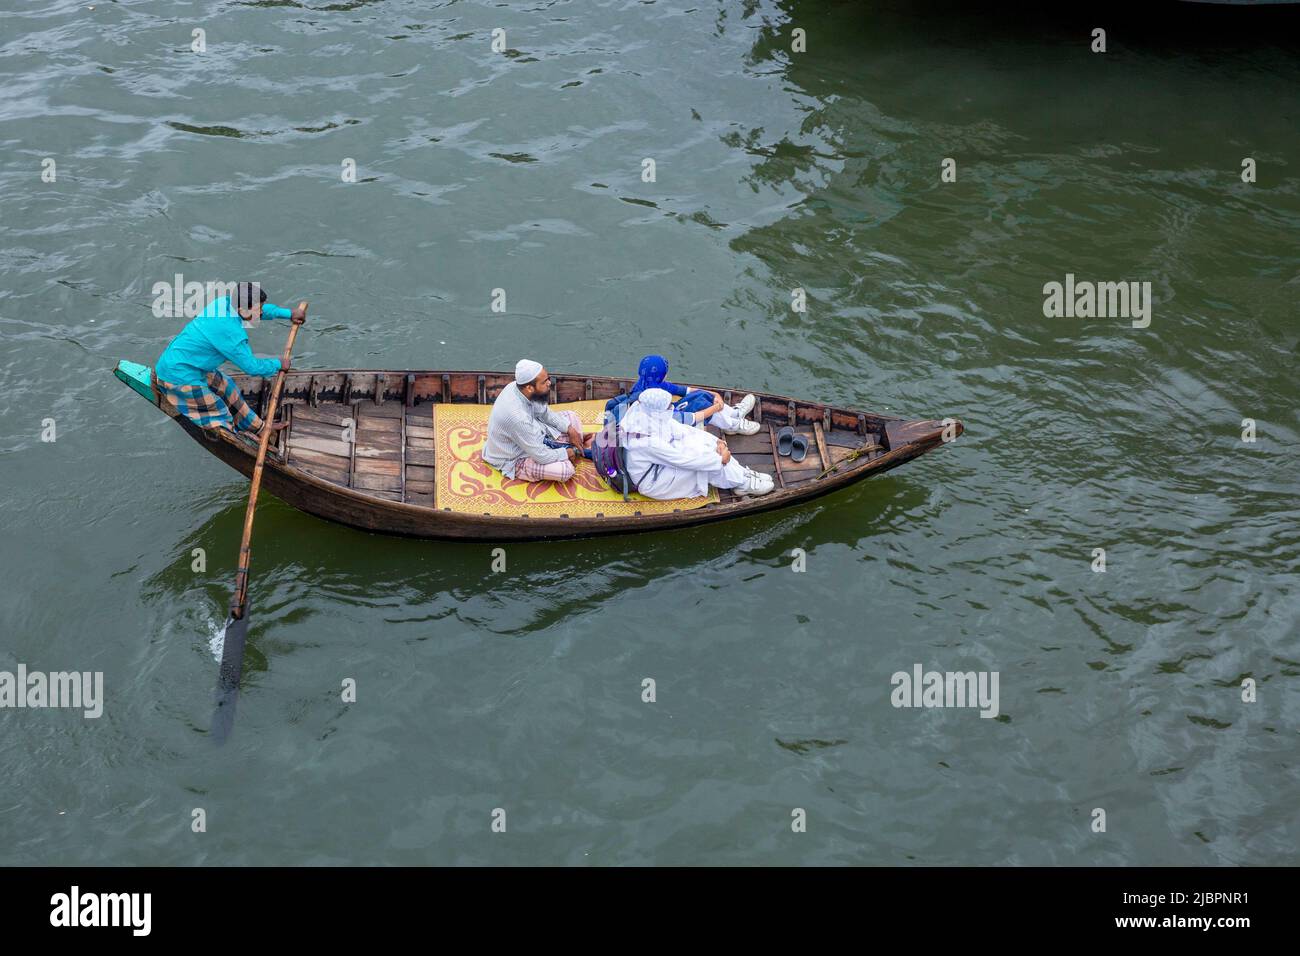 Ferry boat on the buriganga river, Dhaka, Bangladesh. Stock Photo